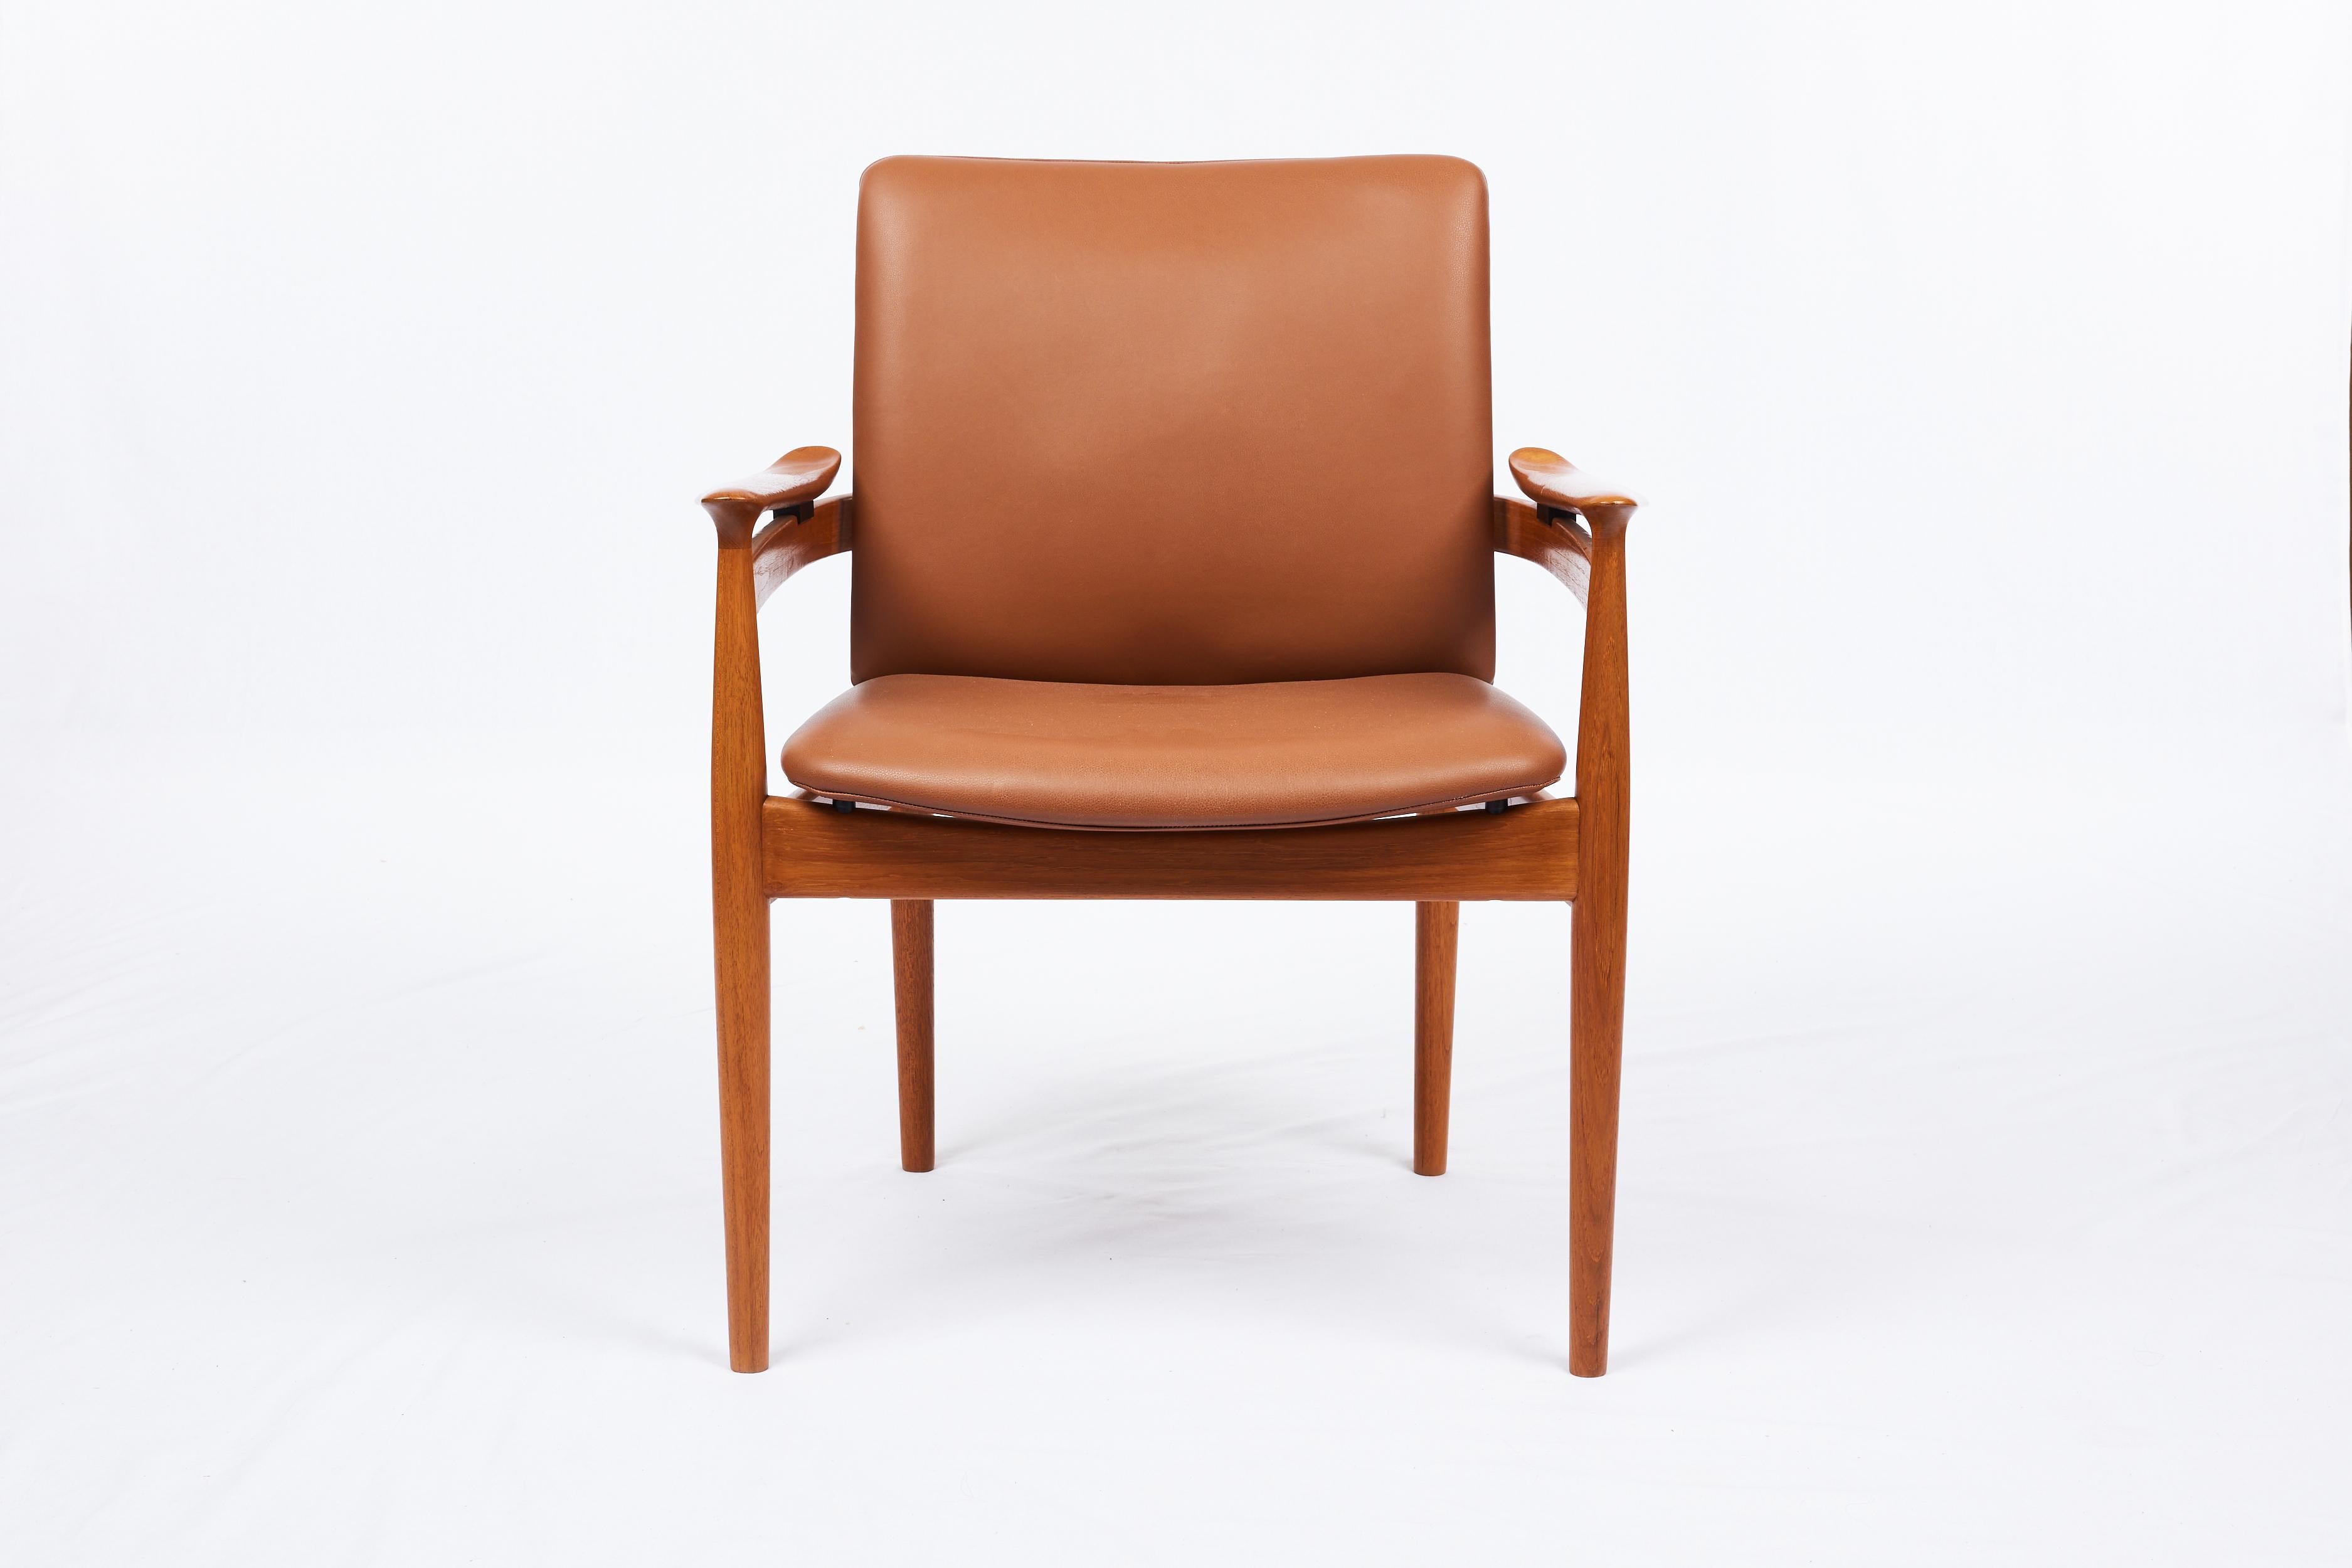 Finn Juhl Model 192 armchair. Designed in 1959. Produced by France and Daverkosen.